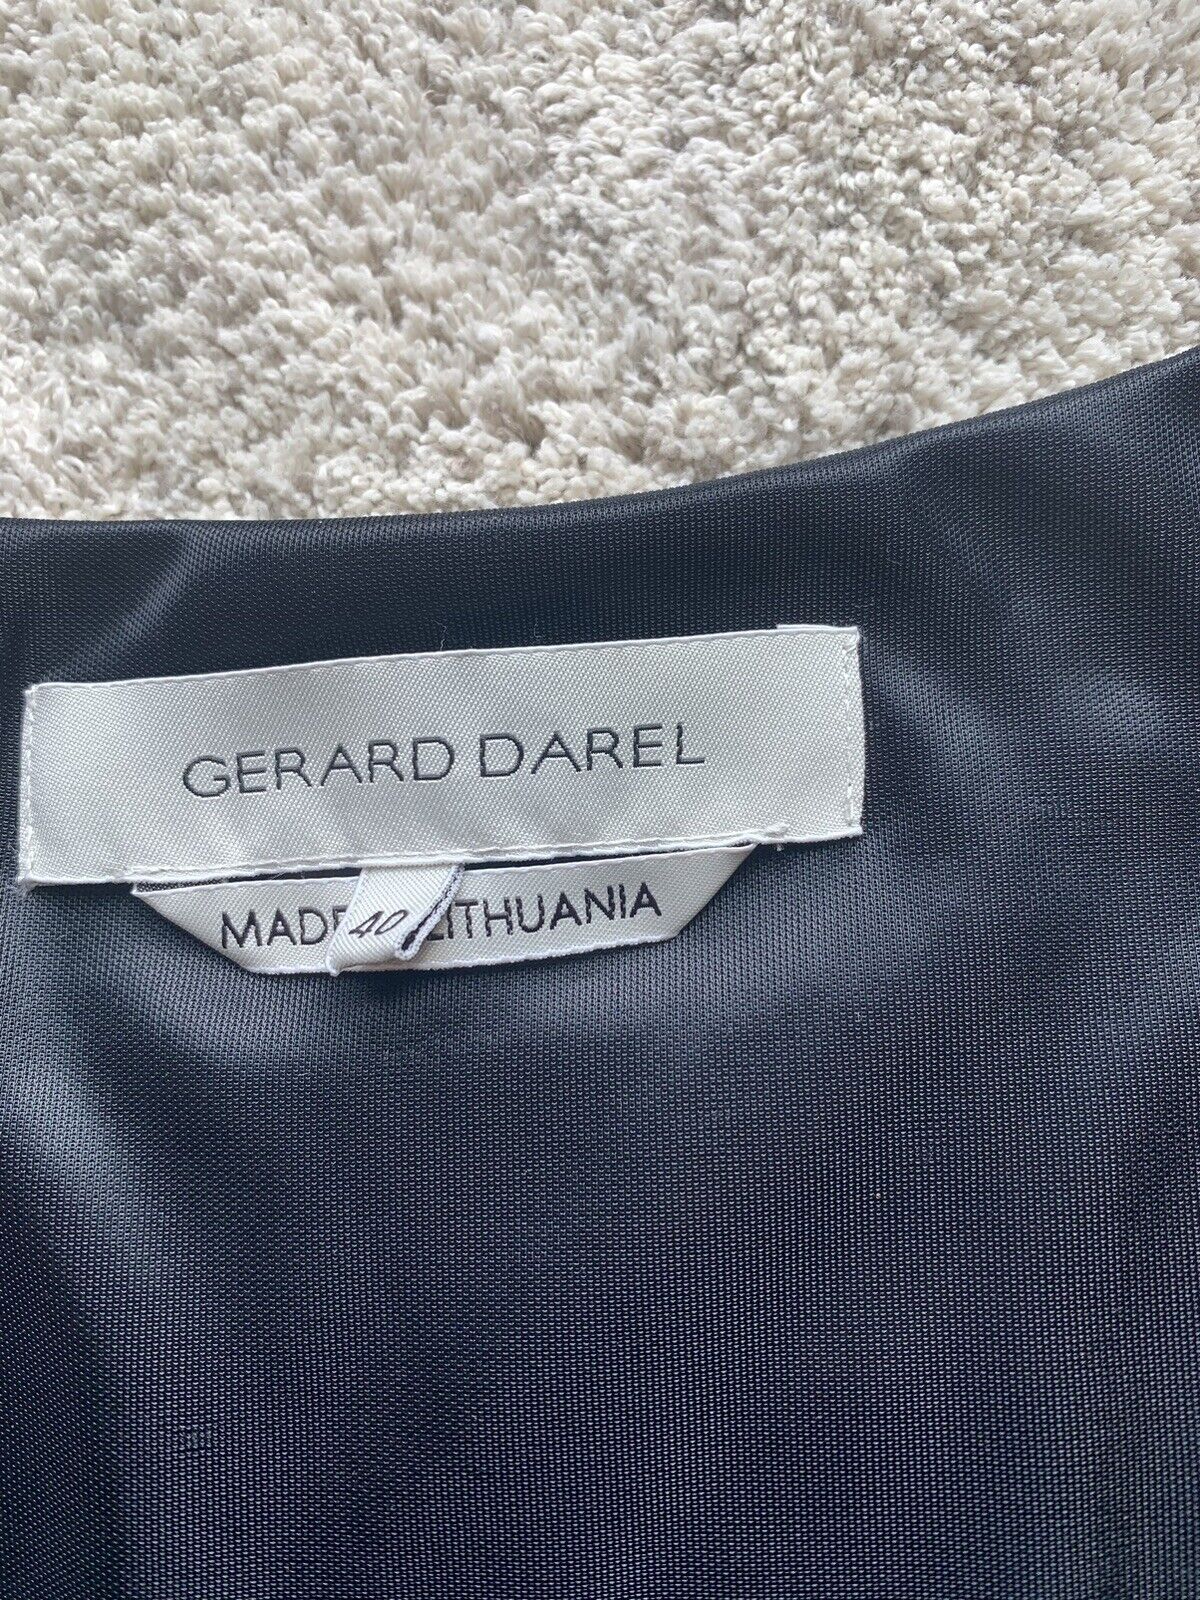 Gerard Darel black dress Wool blend ALine flare m… - image 3